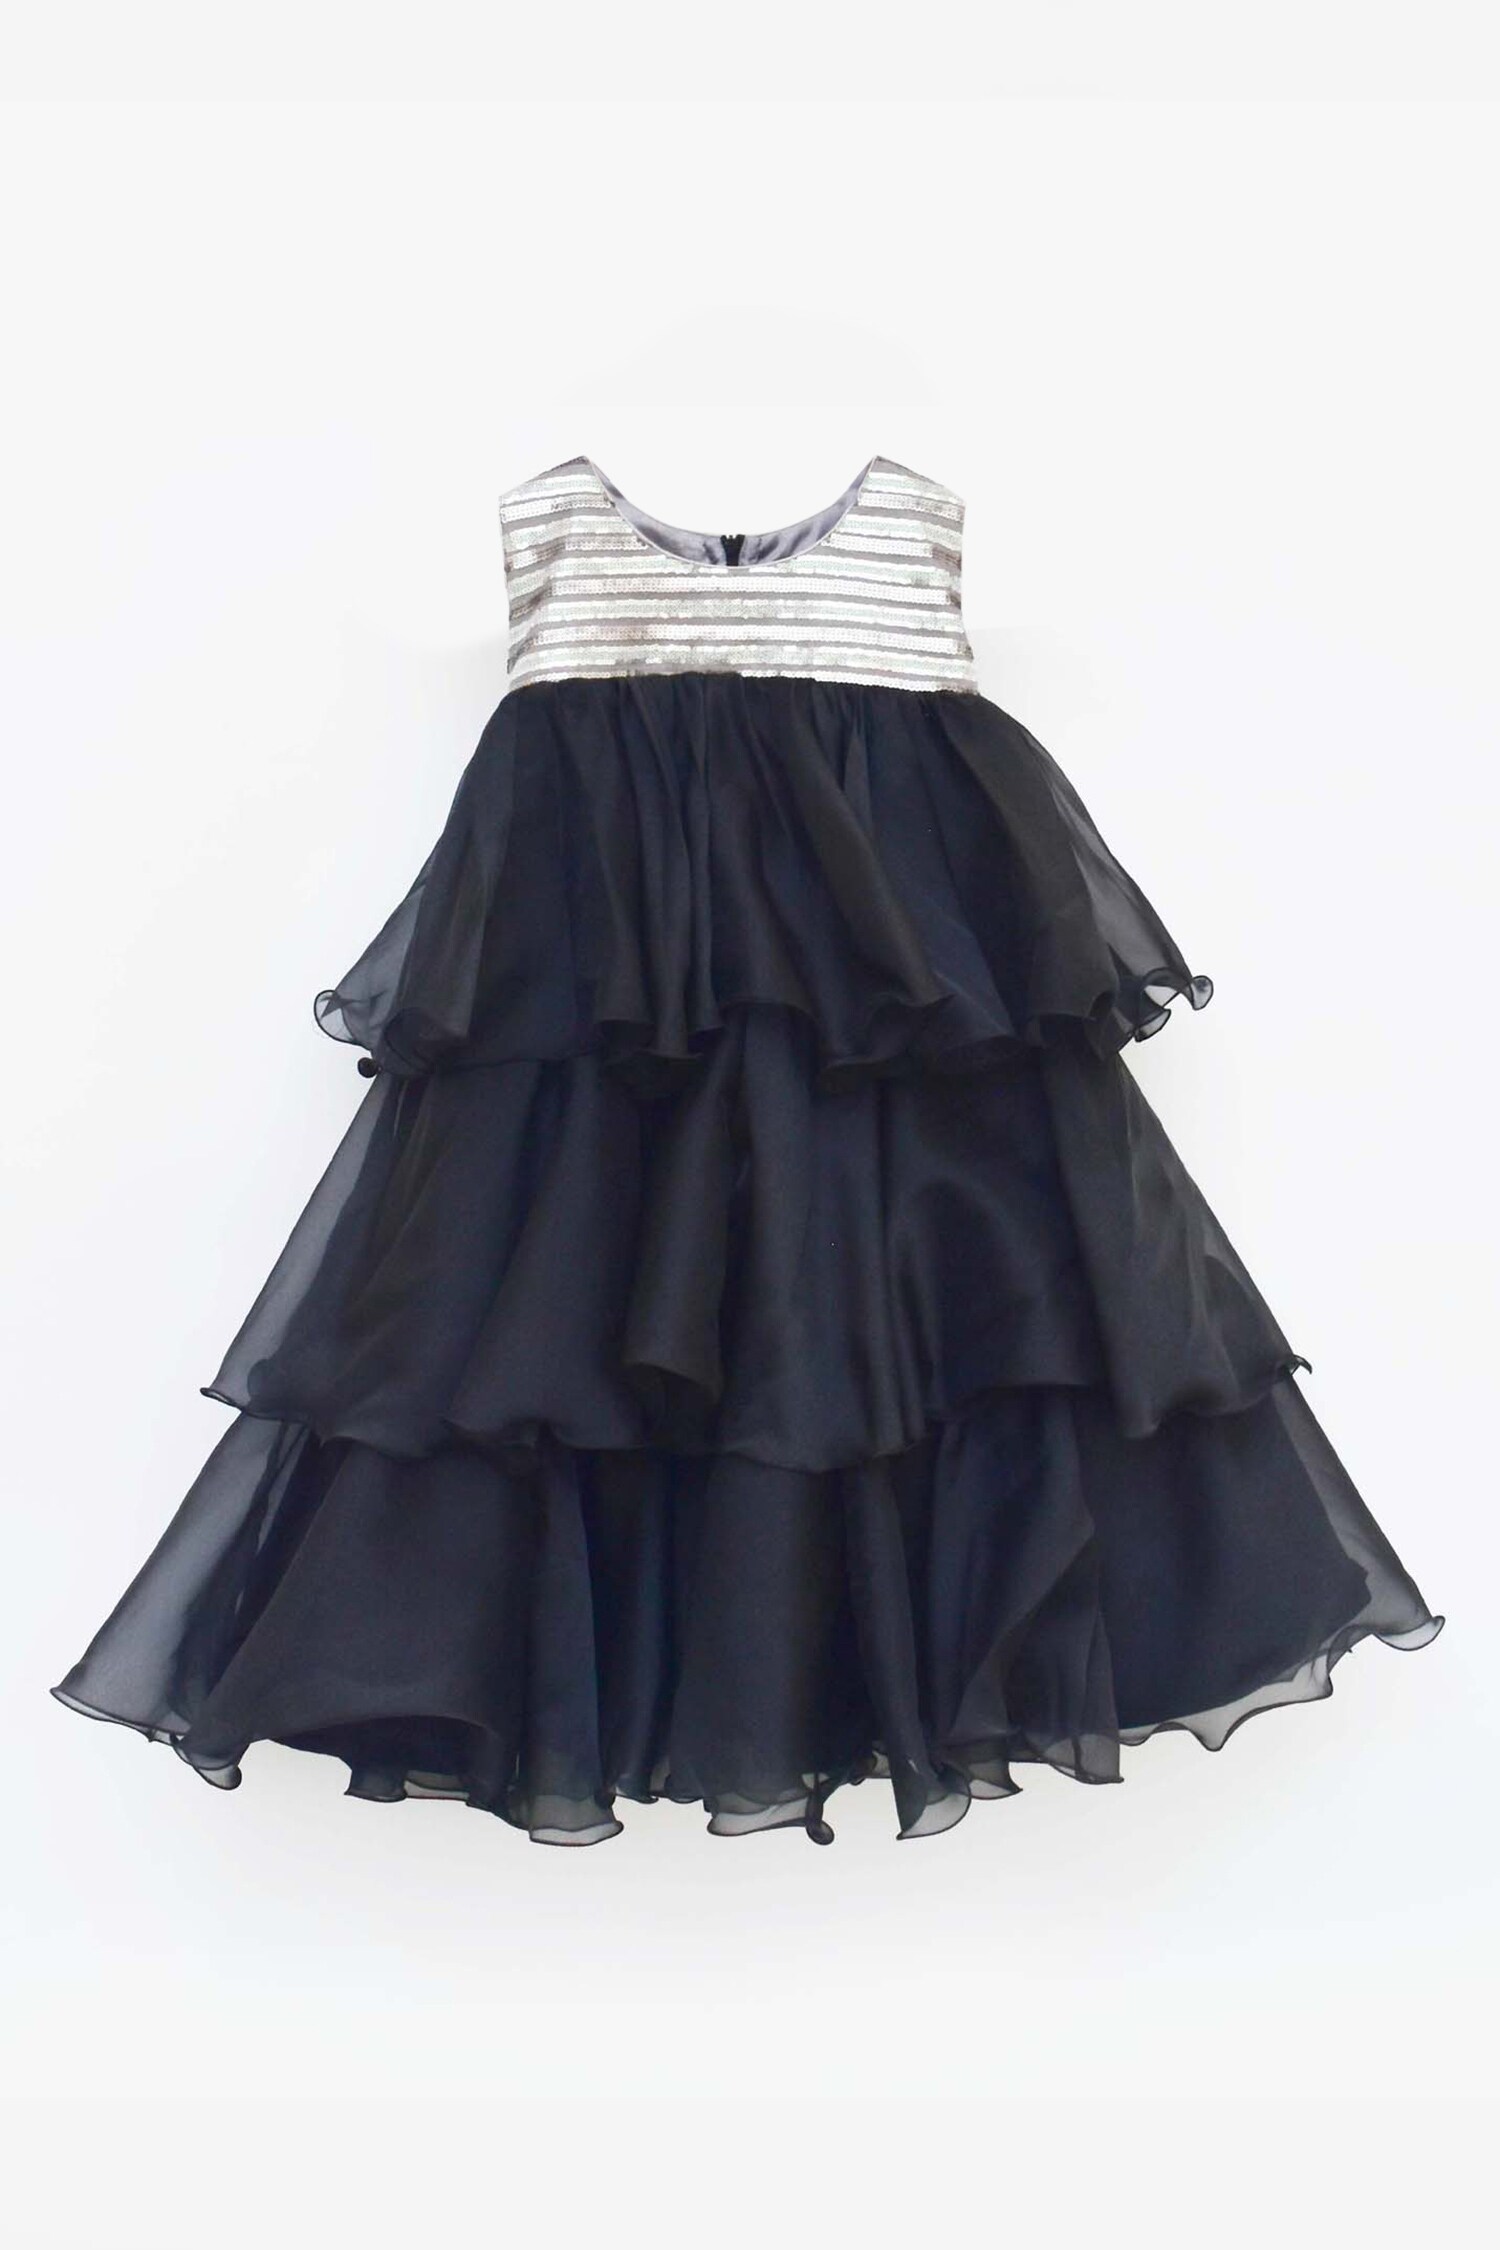 Black Kids Wear Party Gown - Buy Black Kids Wear Party Gown online in India